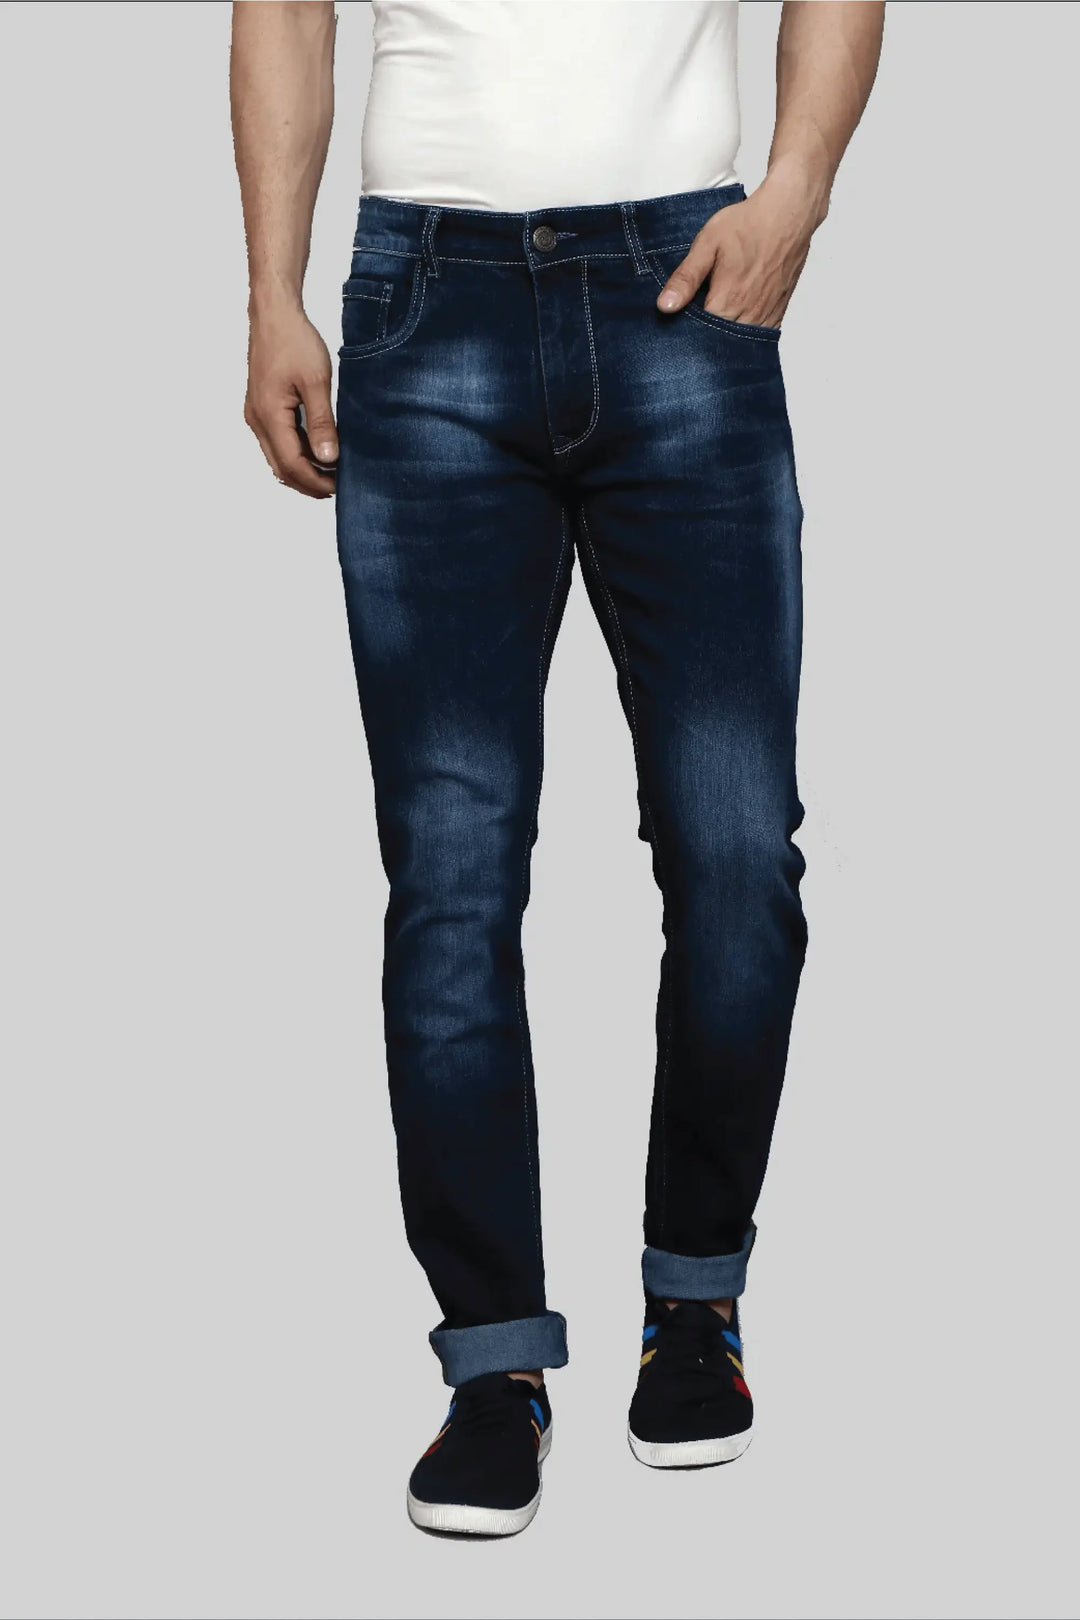 Slim Fit Dark Blue Men's Stretchable Denim Jeans - Peplos Jeans 